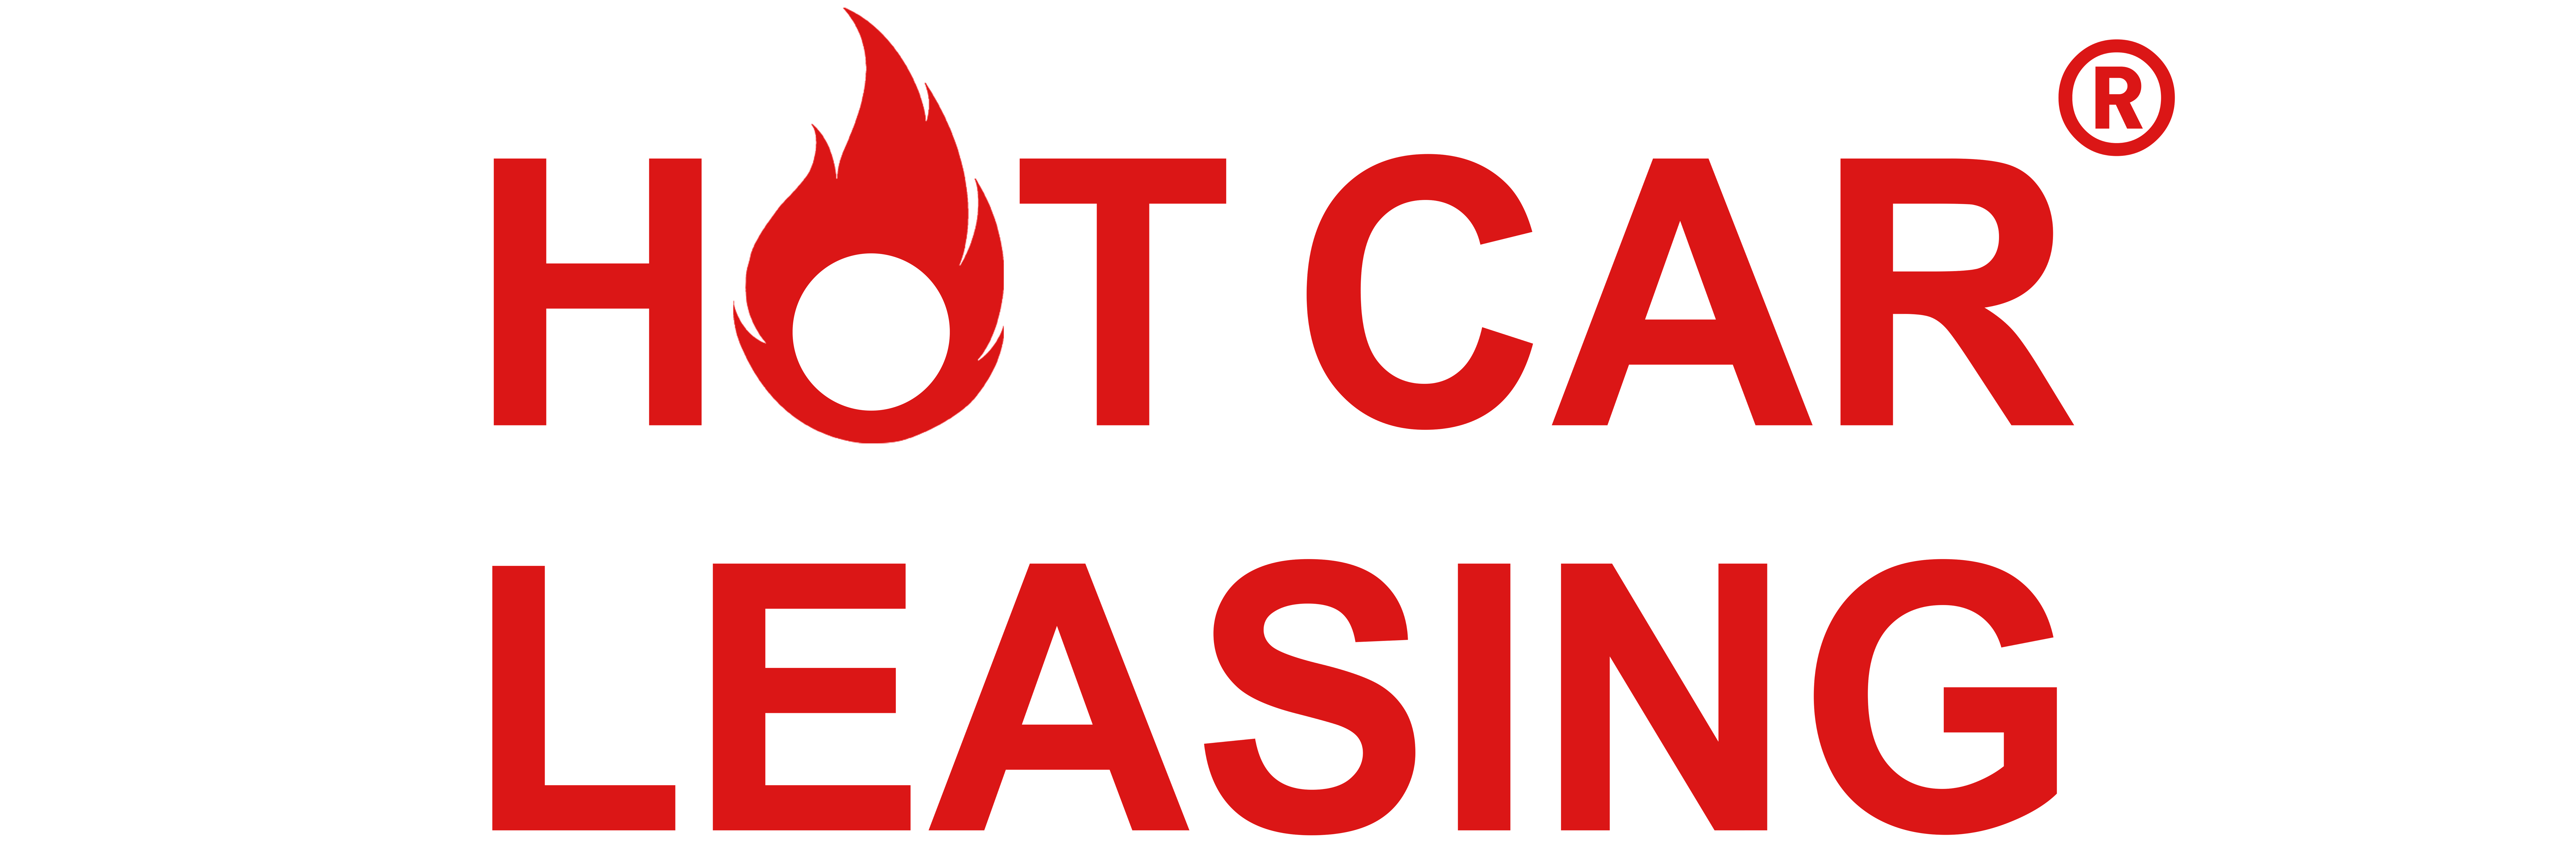 Hot Car Leasing Logo